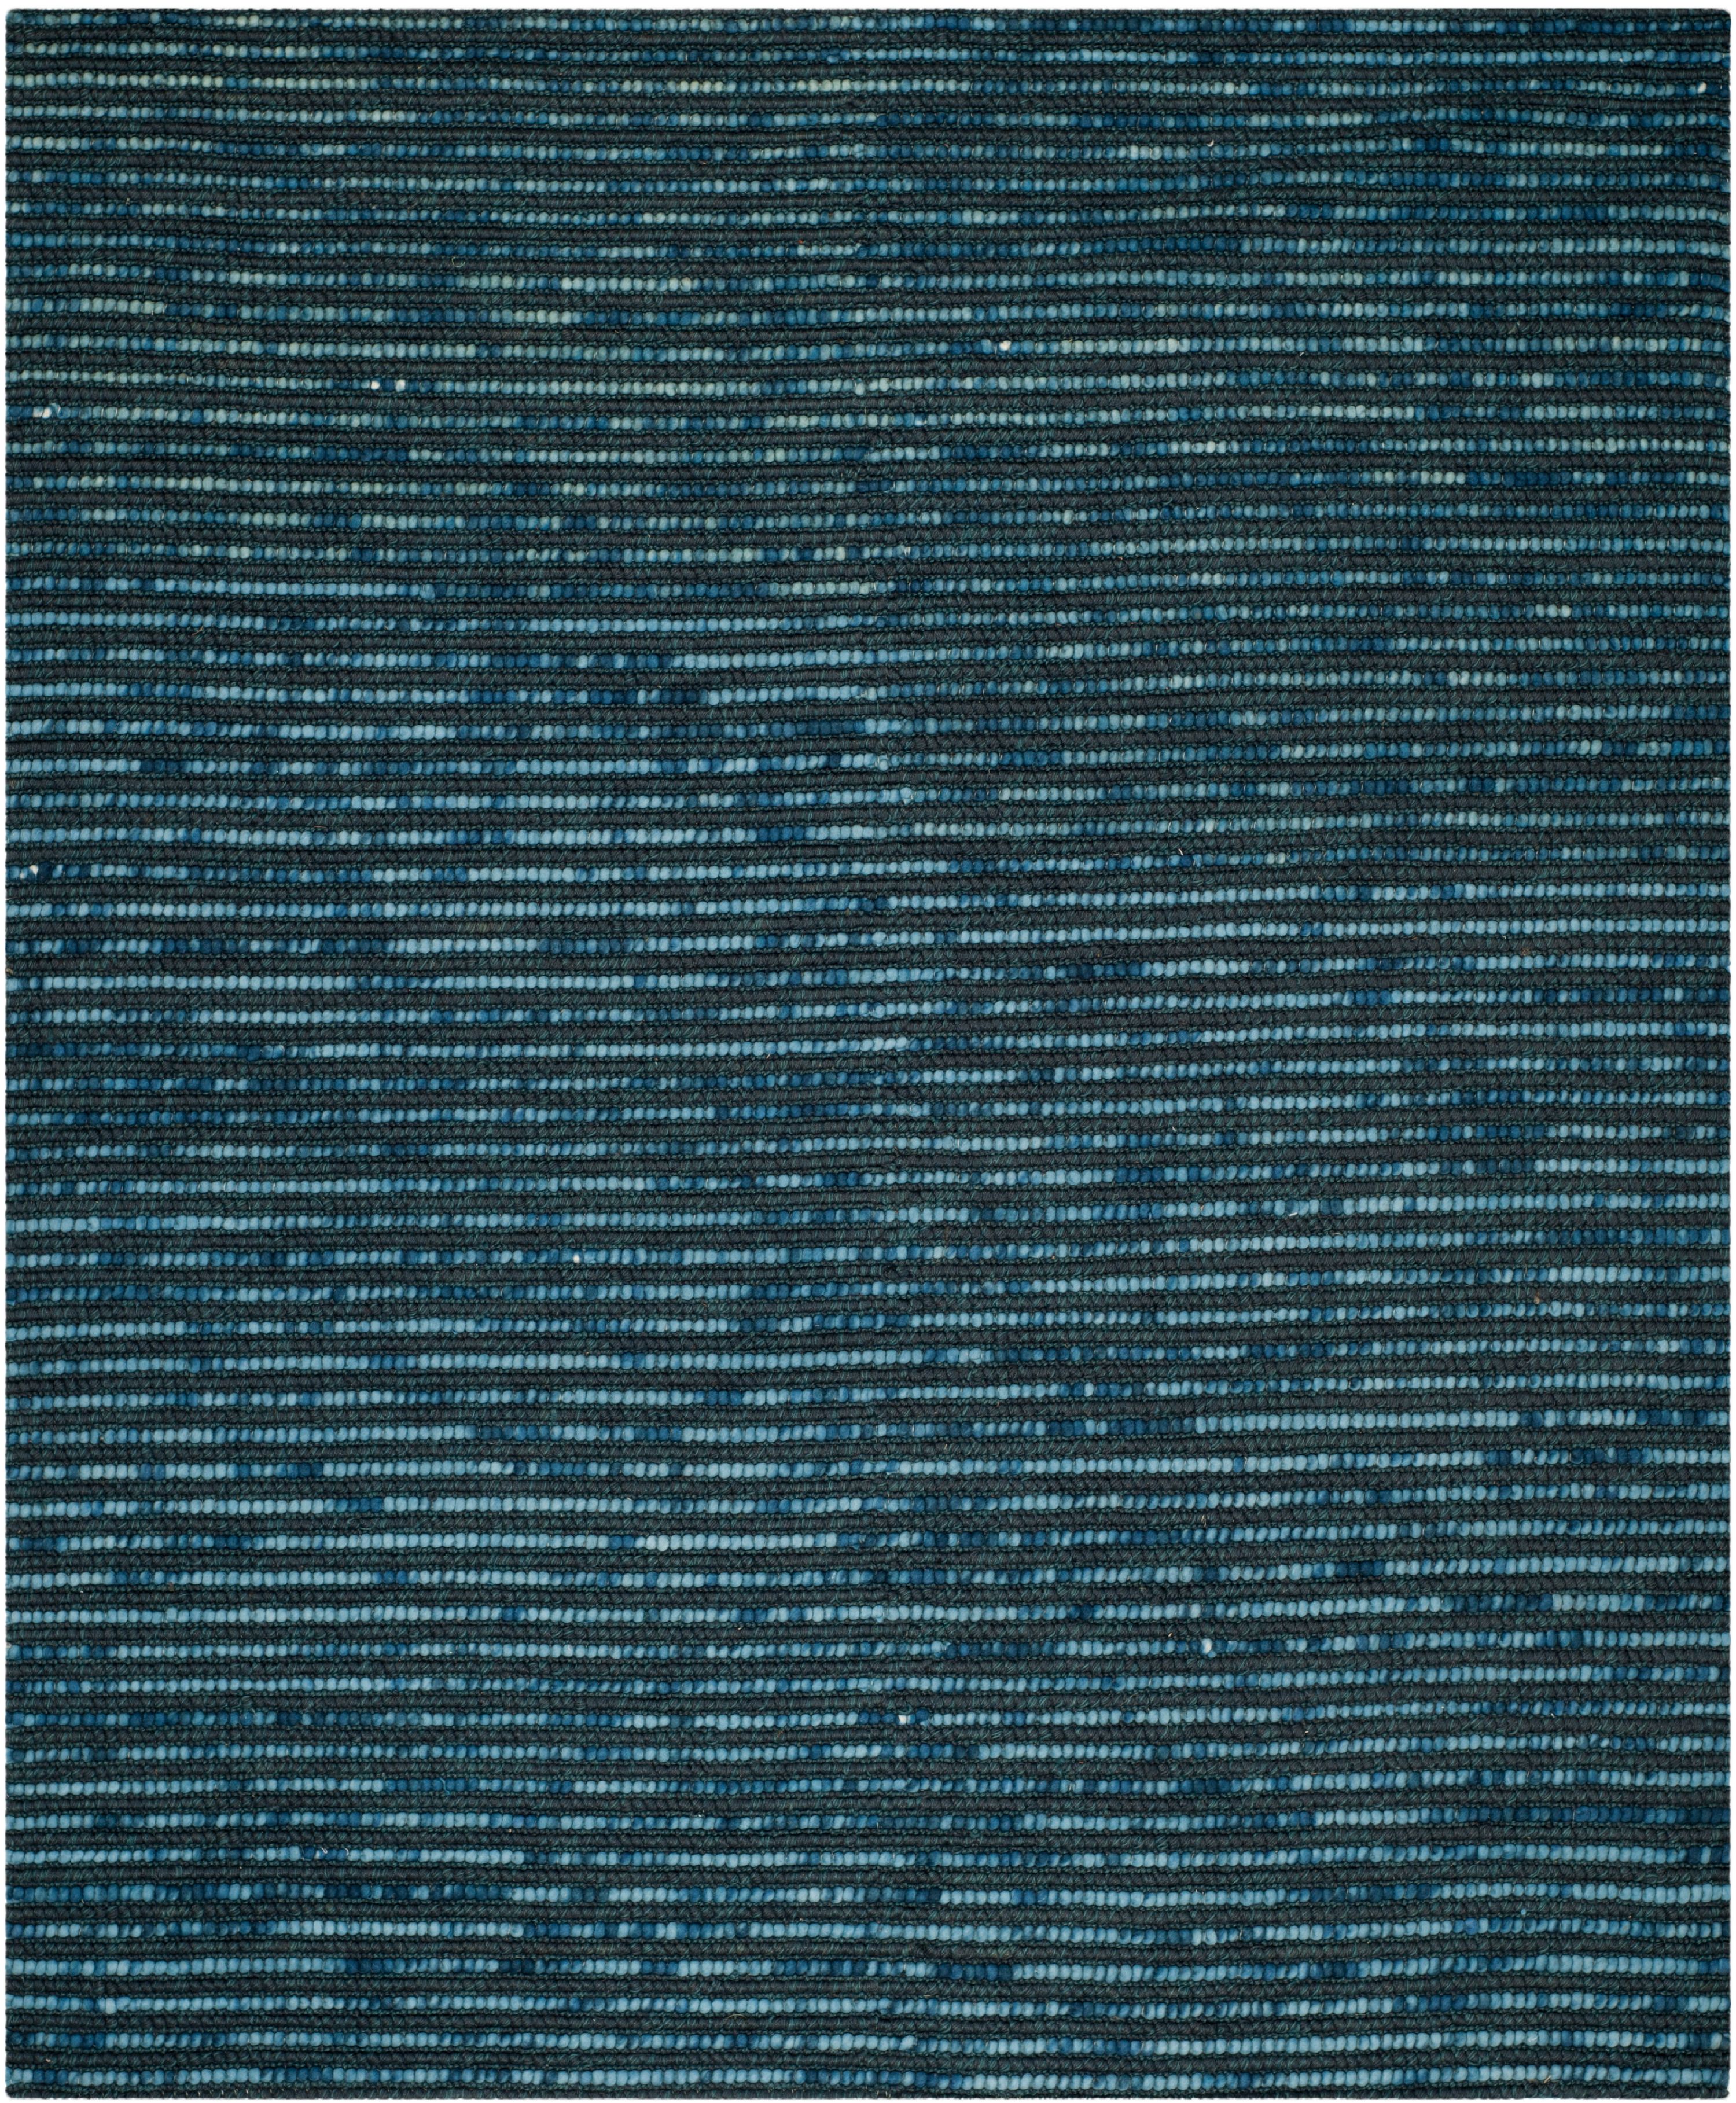 SAFAVIEH Bohemian Nel Transitional Braided Striped Area Rug, Dark Blue/Multi, 11' x 15' - image 5 of 5